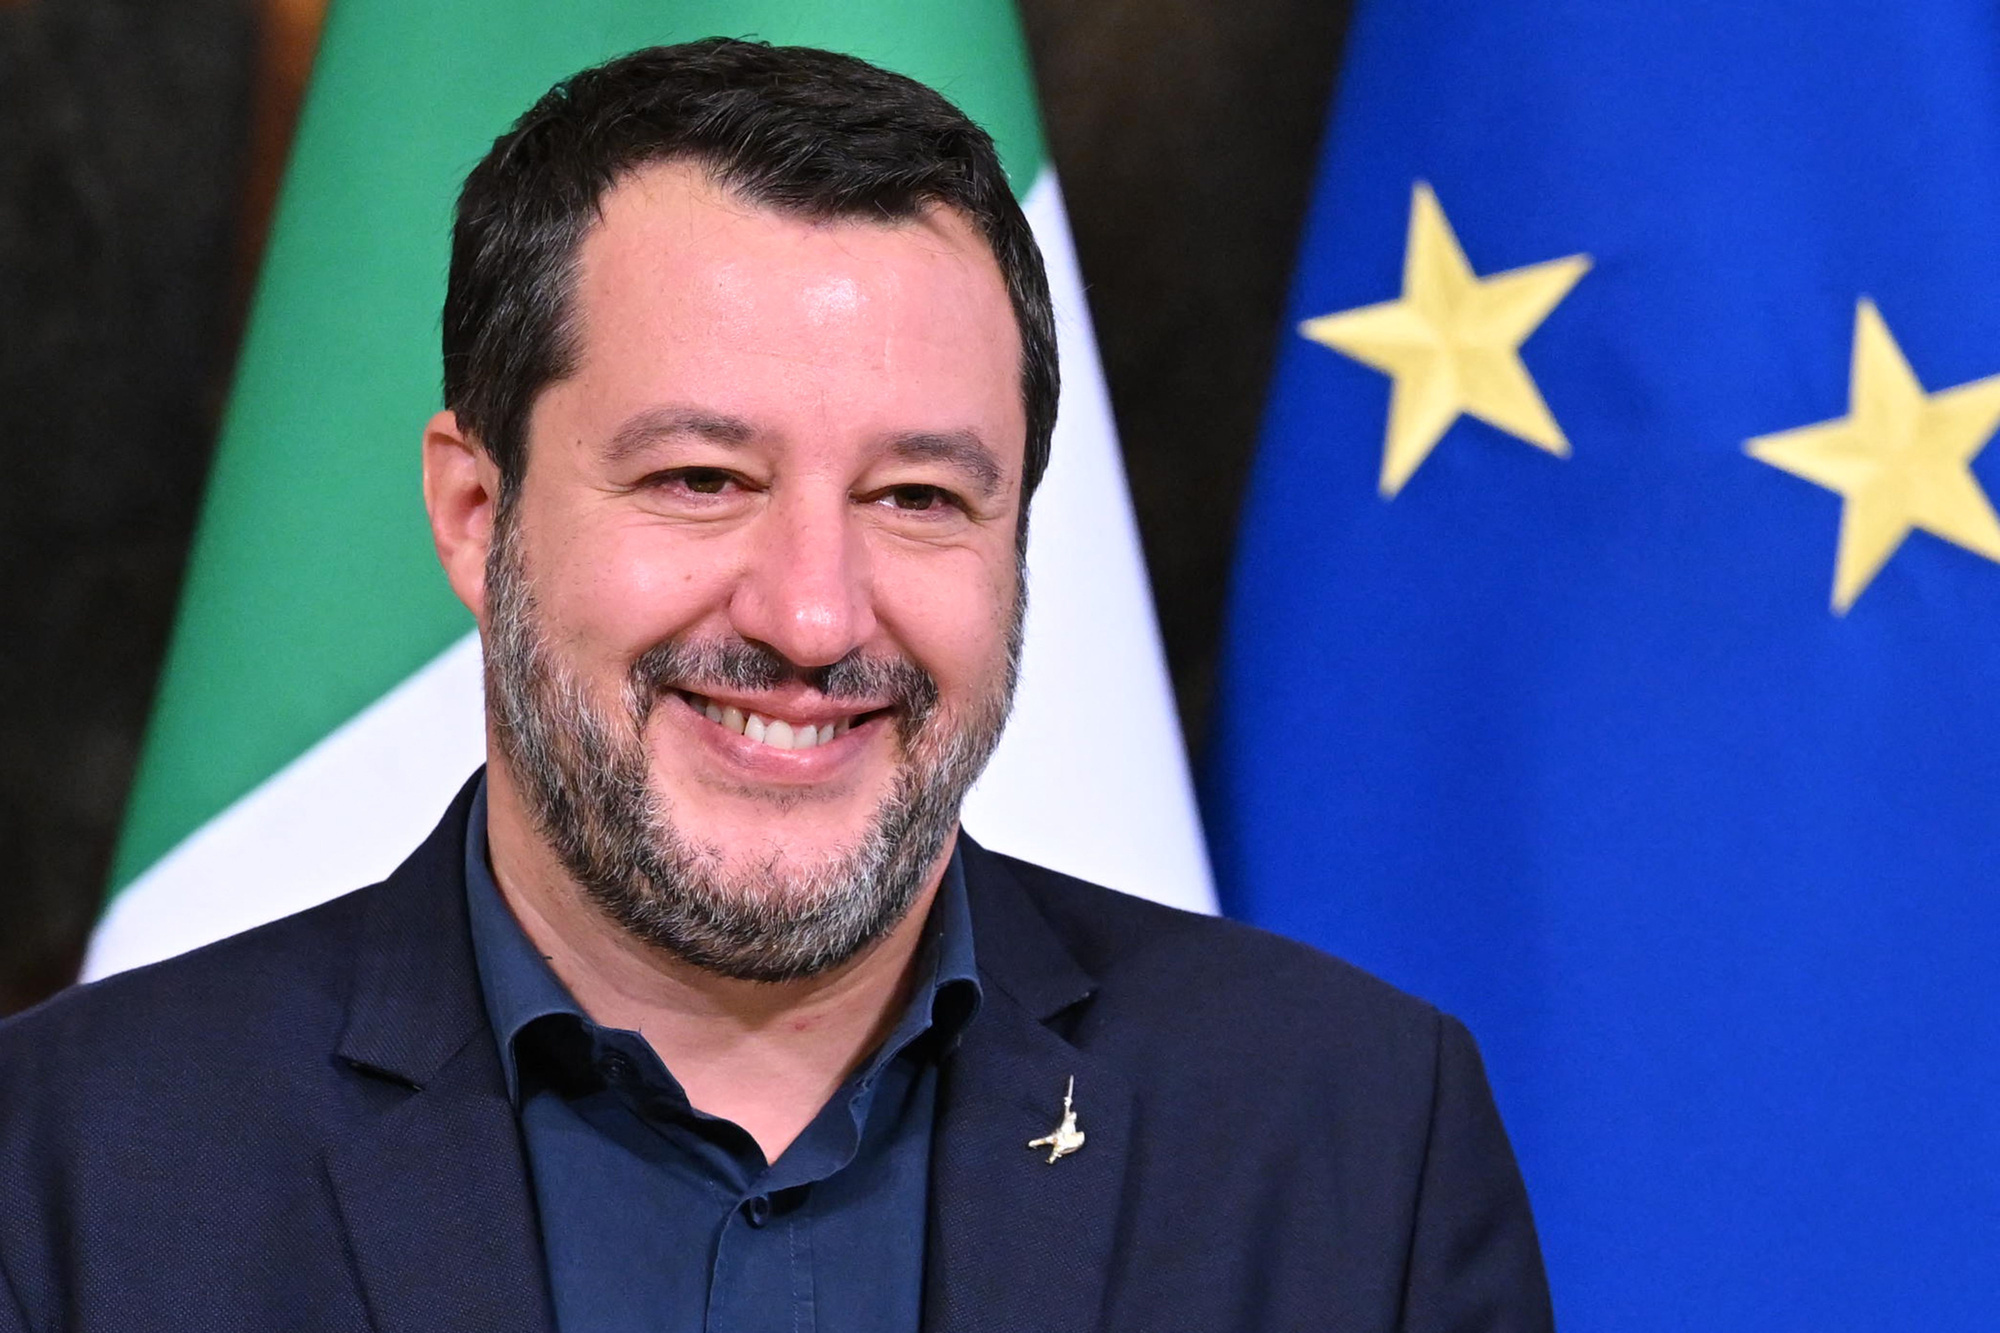 Deputy Prime Minister of Italy Matteo Salvini.